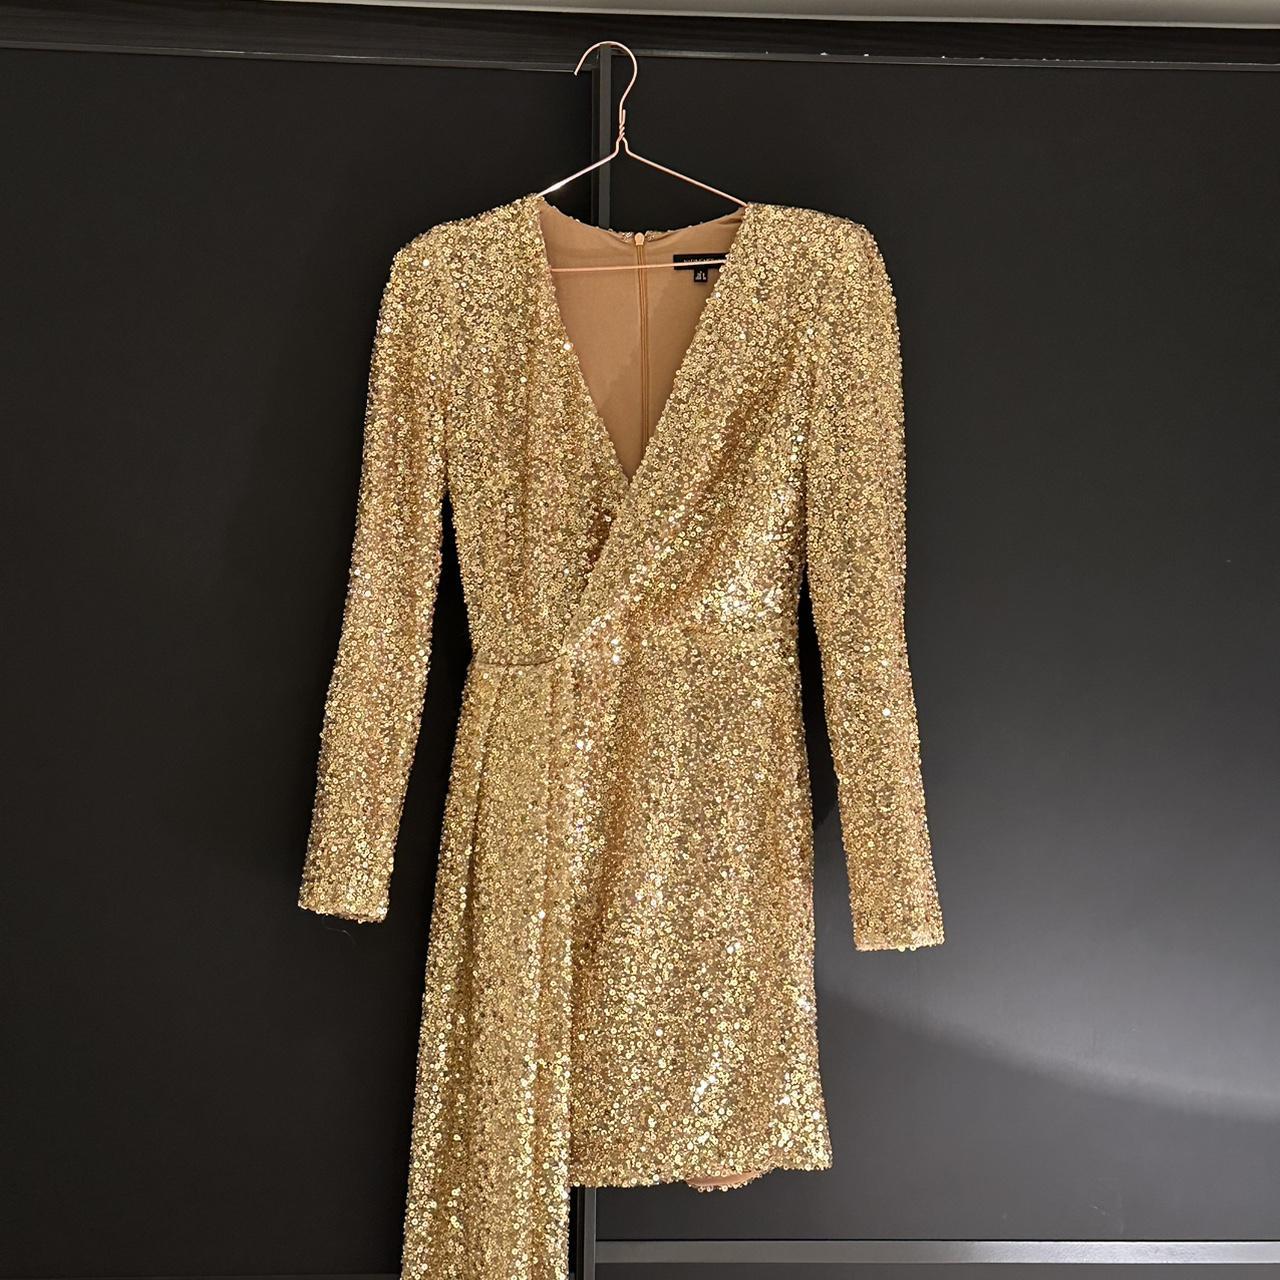 Nadine Merabi Women's Gold Dress | Depop